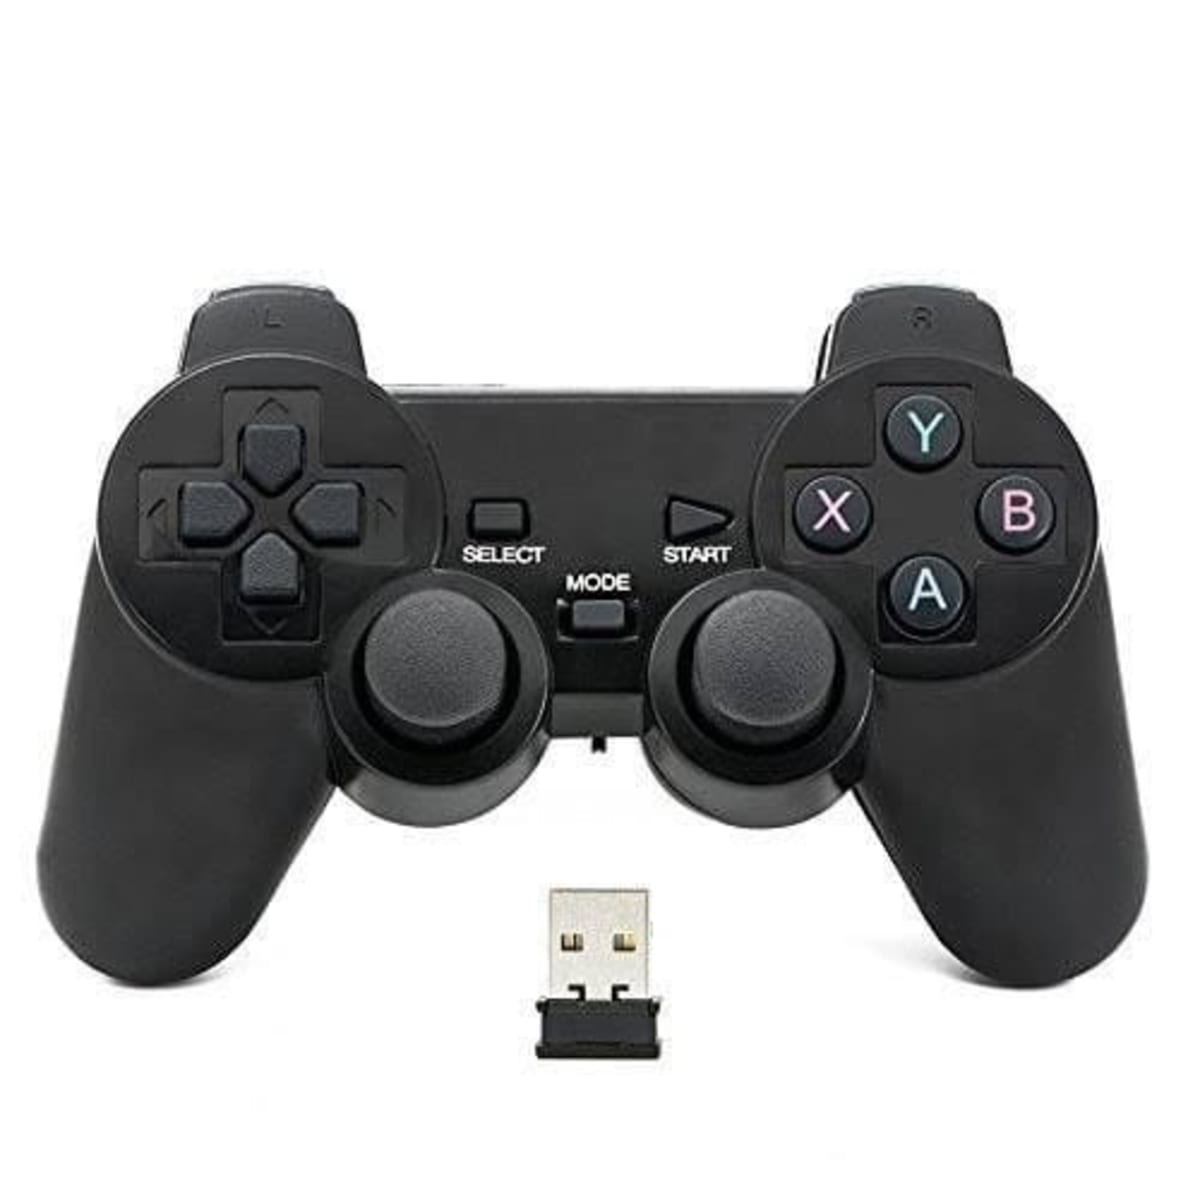 4g wireless controller gamepad